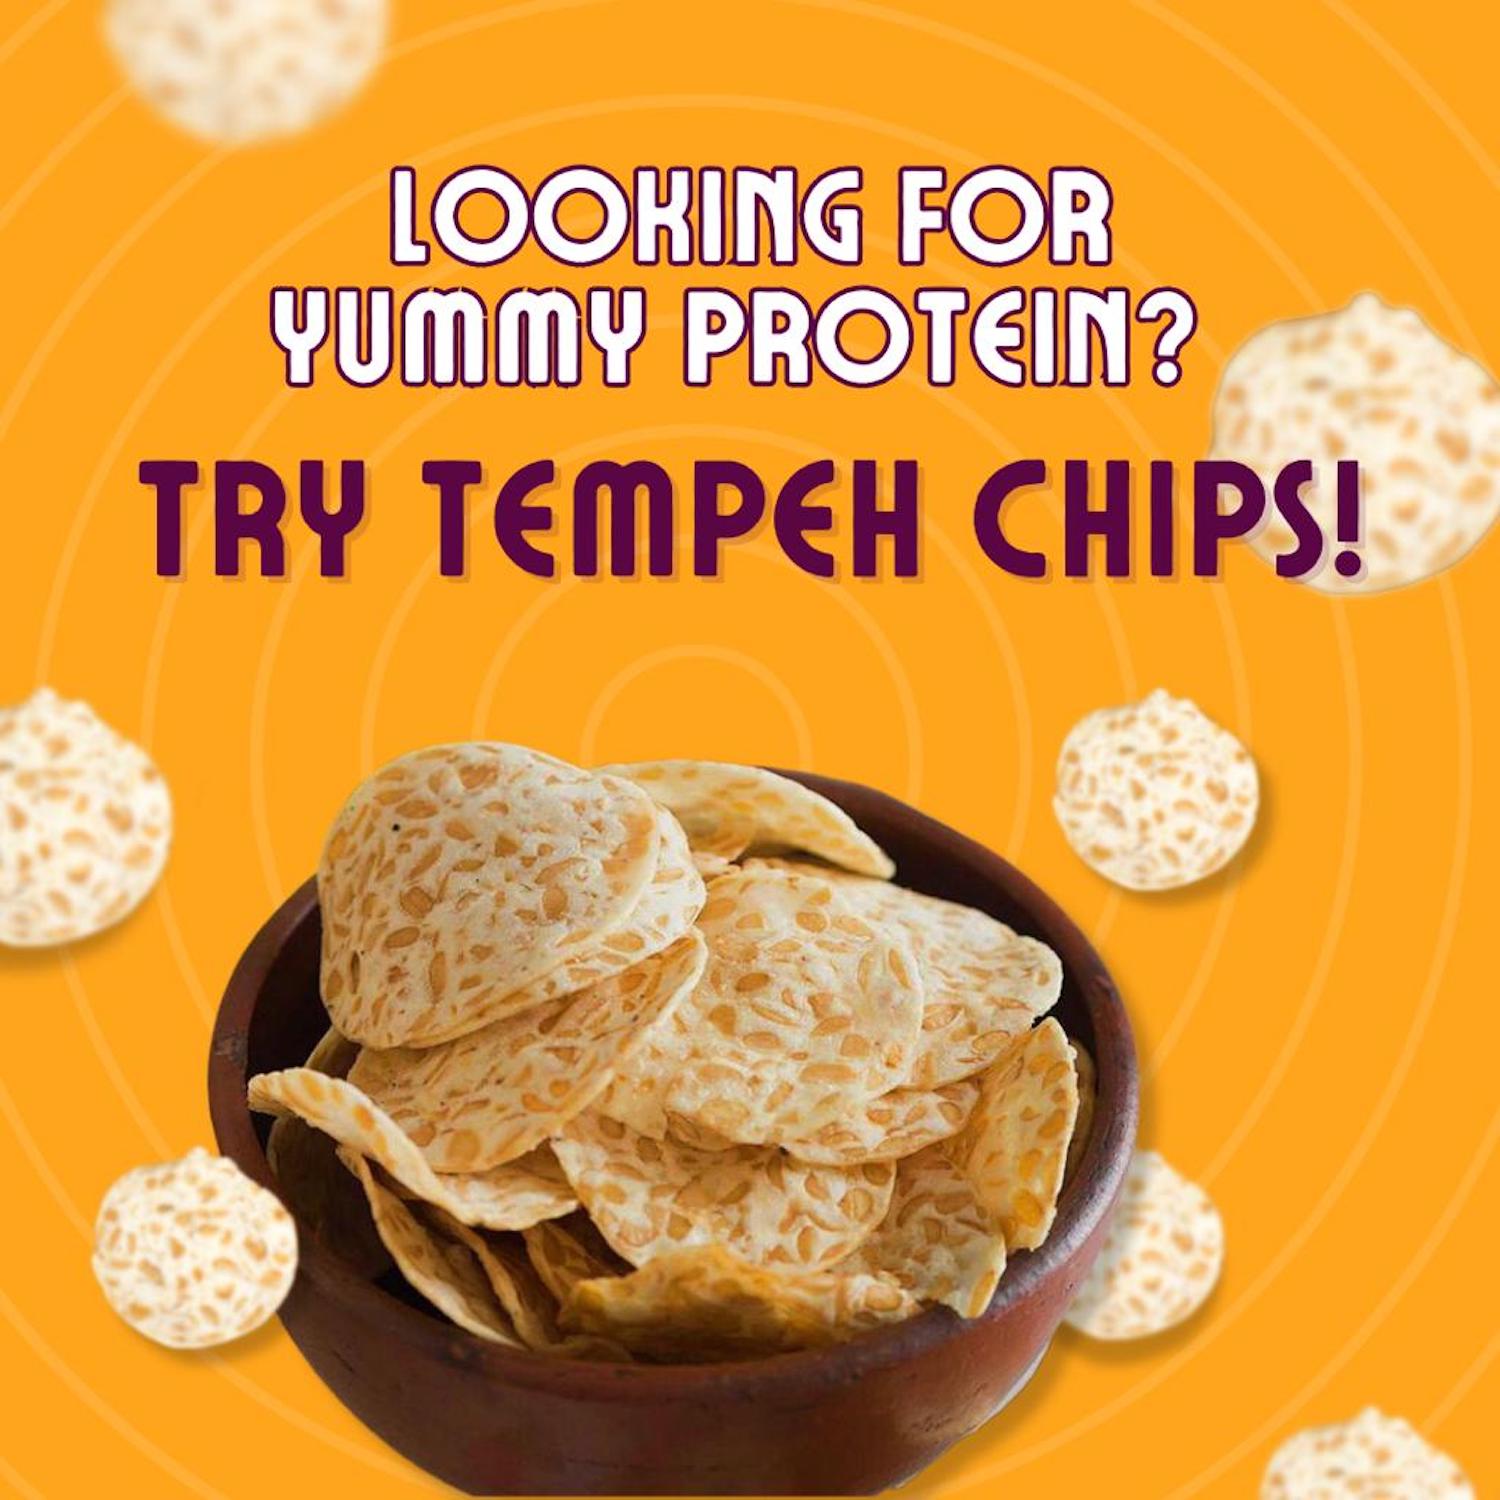  soybean Tempeh chips